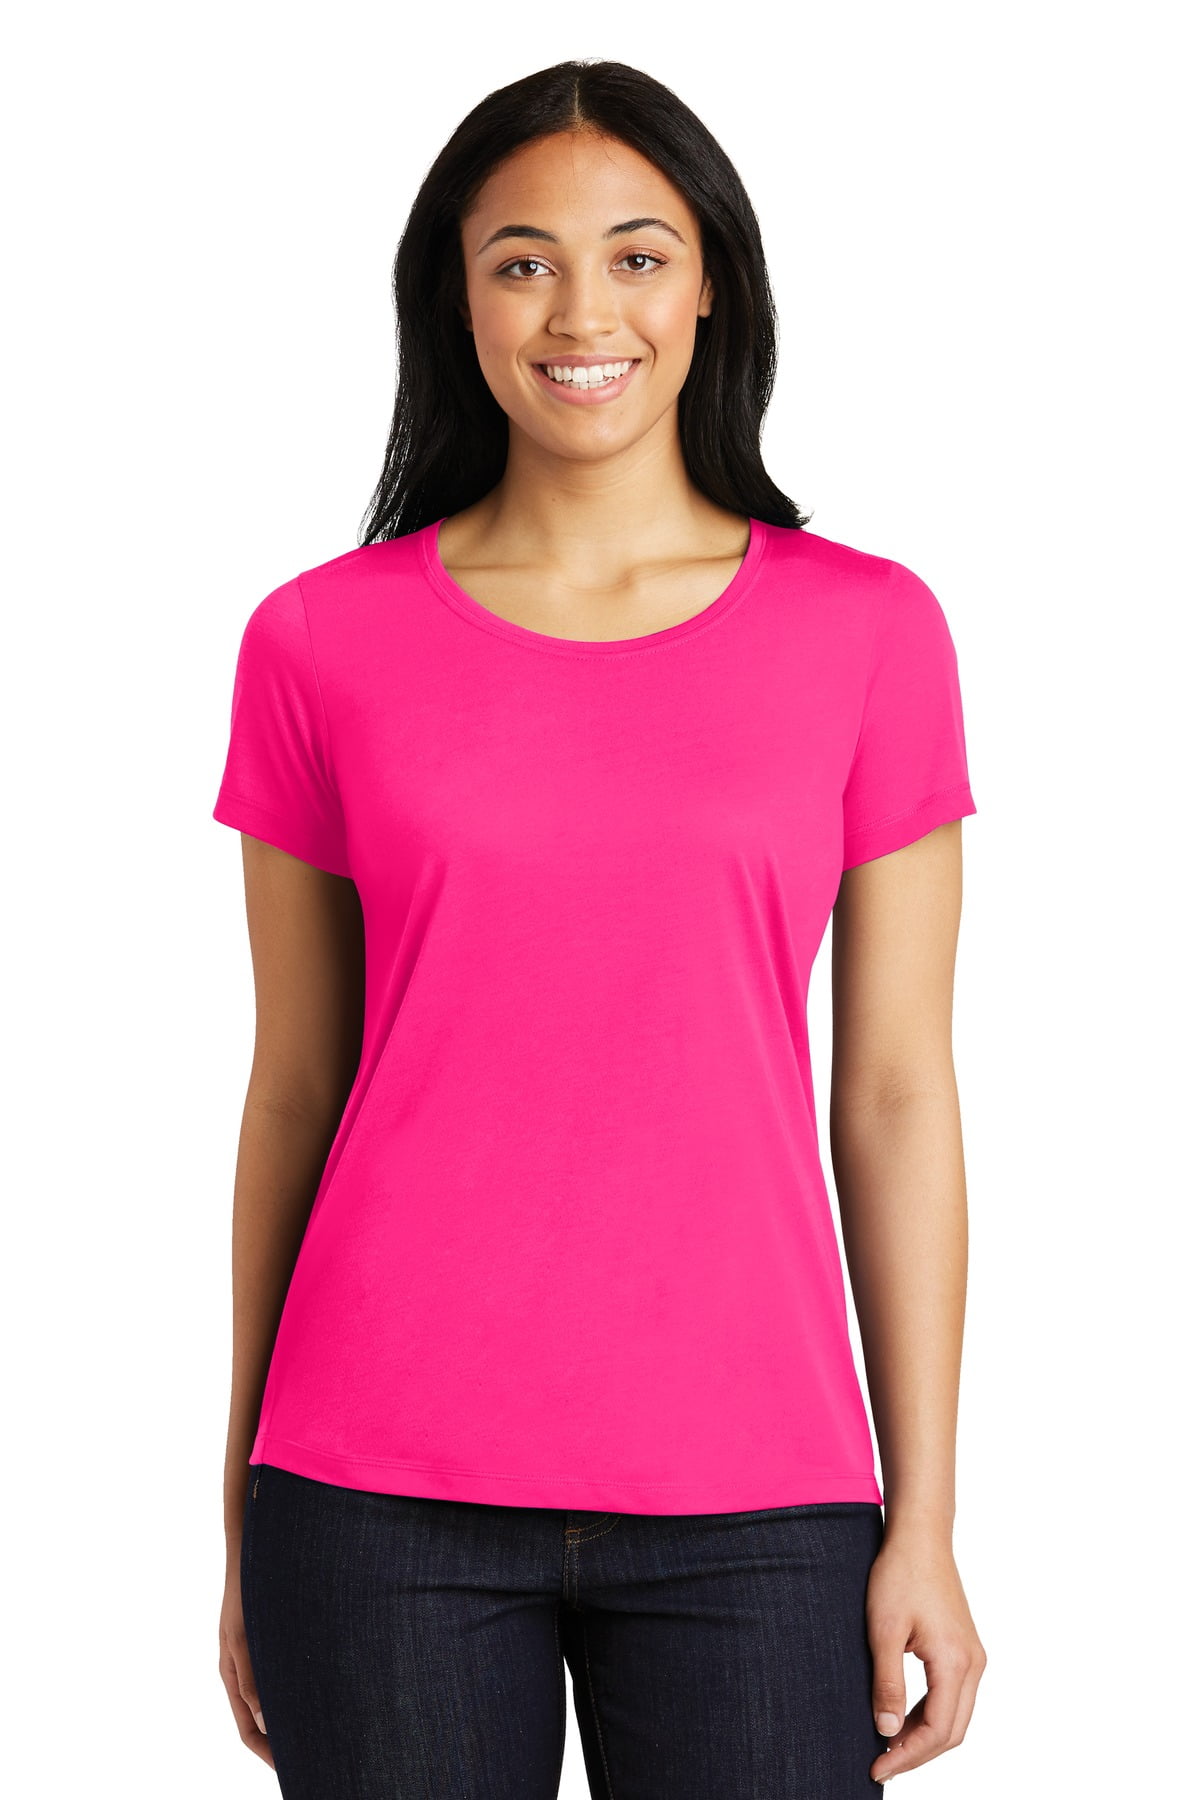 Sport Tek Adult Female Women Plain Short Sleeves T-Shirt Neon Pink ...